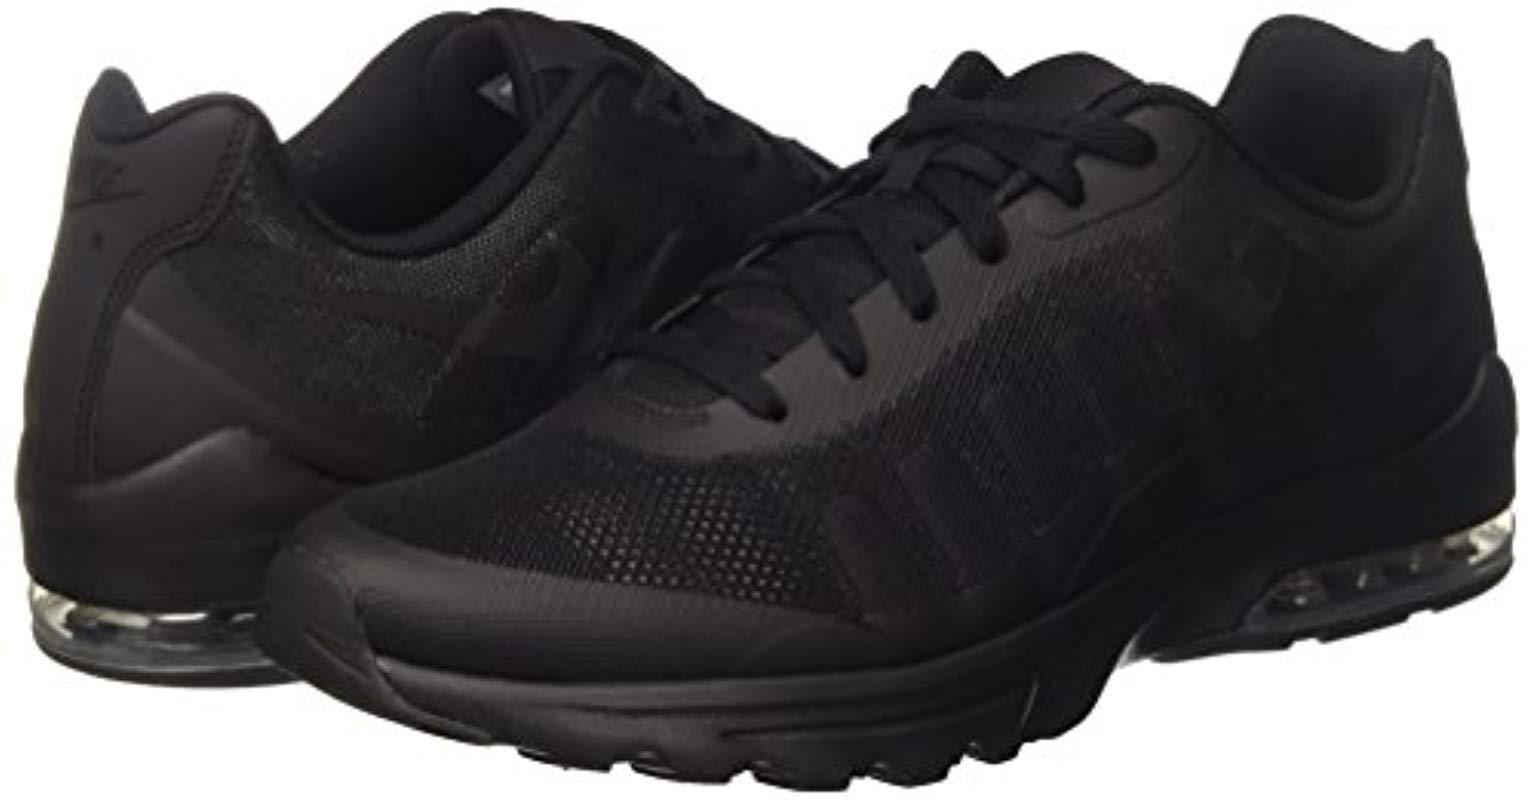 Nike Rubber Air Max Invigor Trainers in Black Black Black Anthracite (Black)  for Men - Save 71% | Lyst UK